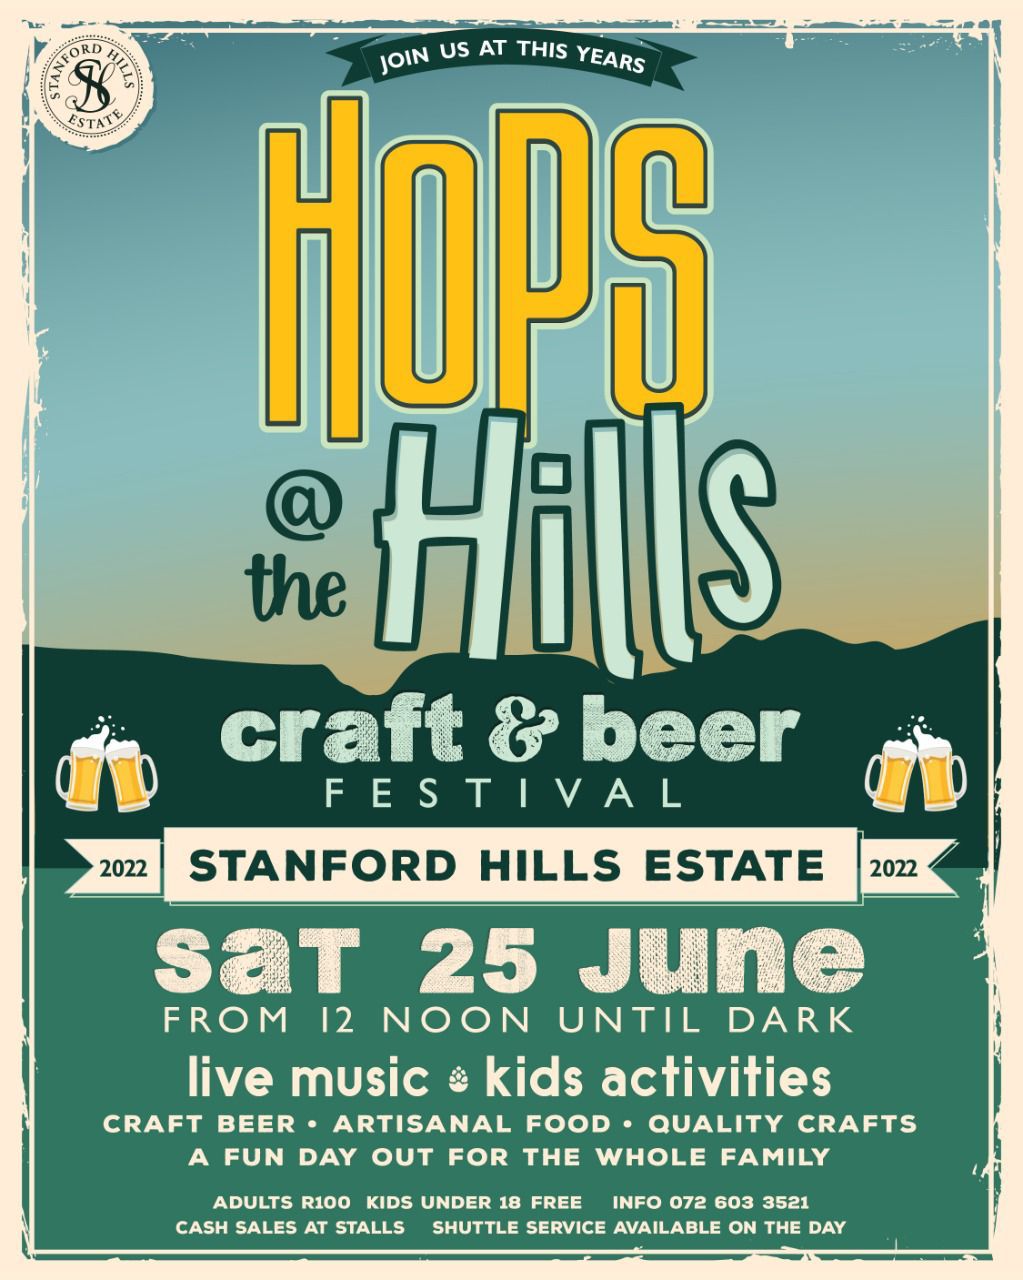 Hops @ the Hills, Beer and Food Festival, 25th JUNE 2022 - Stanford Hills Estate near Hermanus